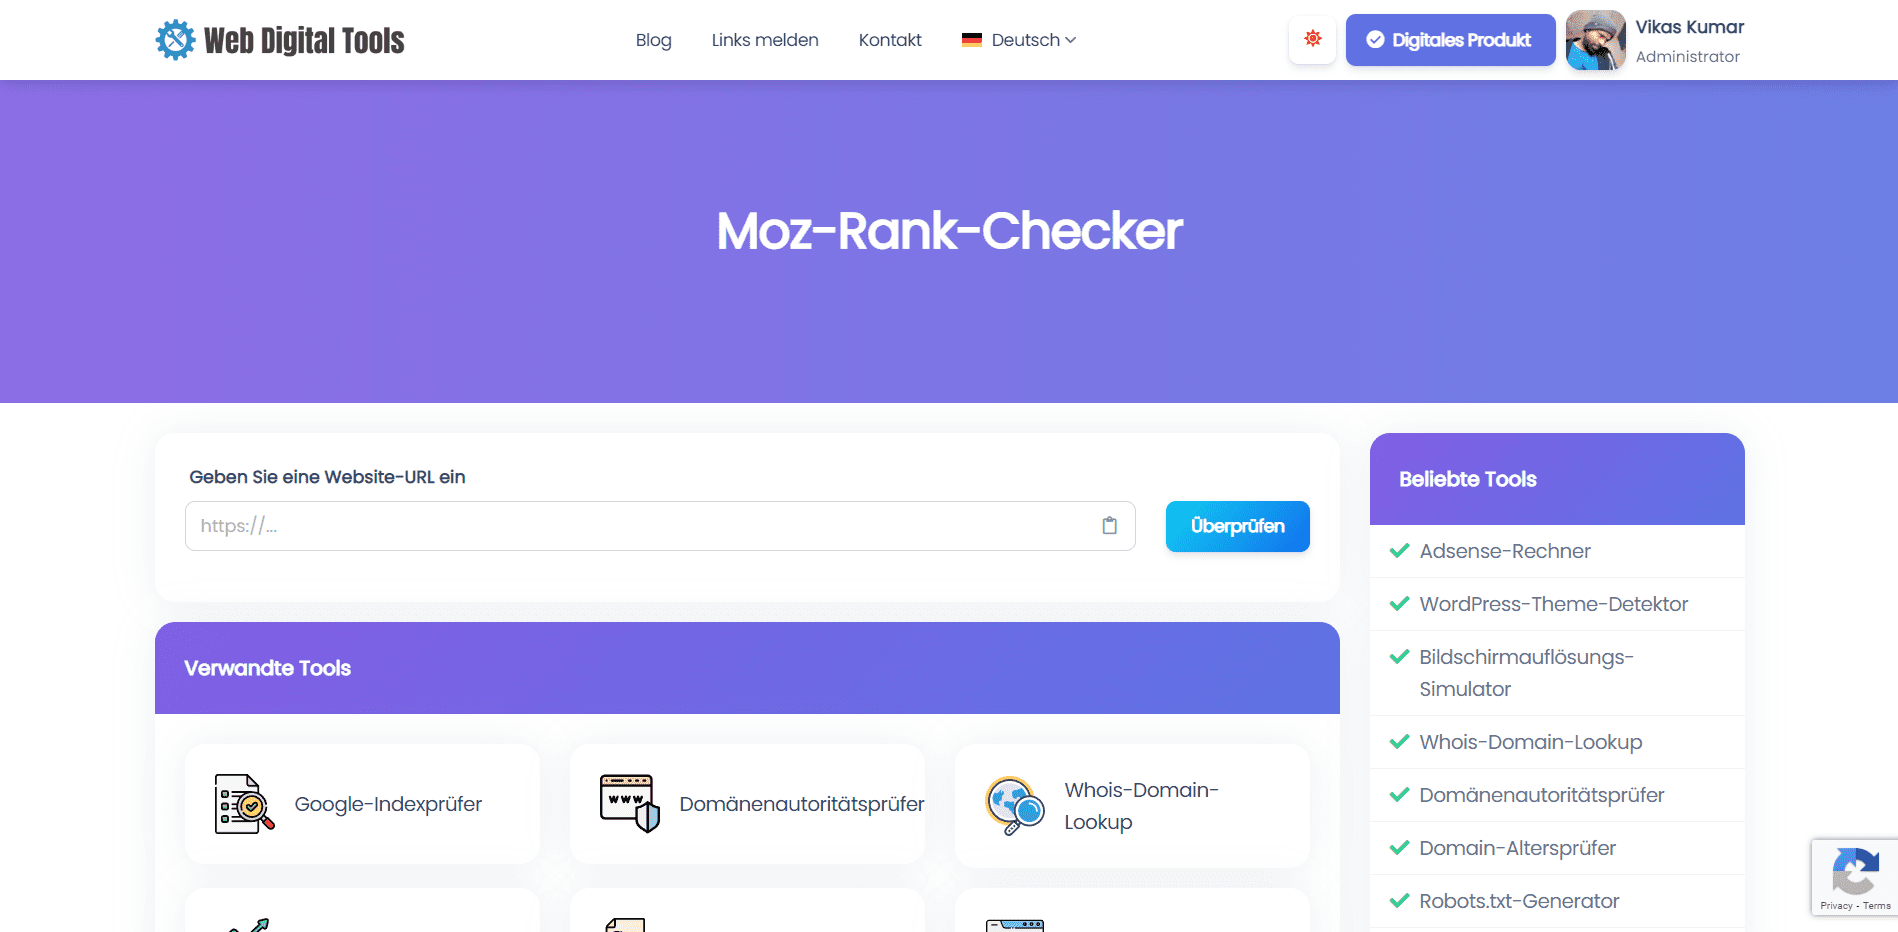 Moz-Rank-Checker